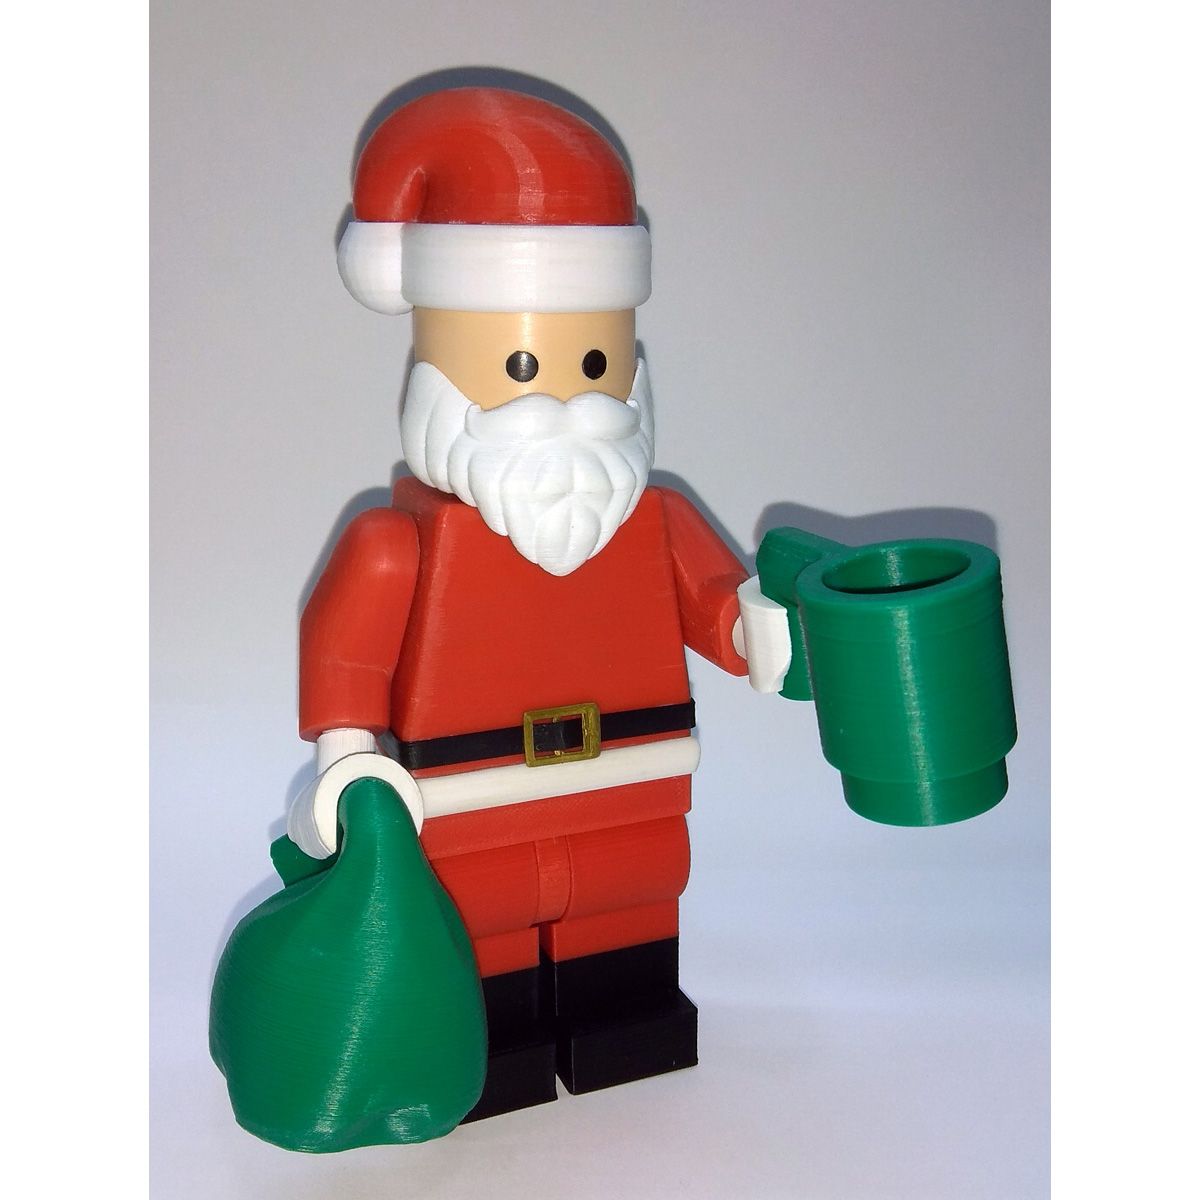 Lego_Minifig_-_Santa_Clause_14.jpg Download free STL file Jumbo Christmas - Santa Claus • 3D printer model, HowardB